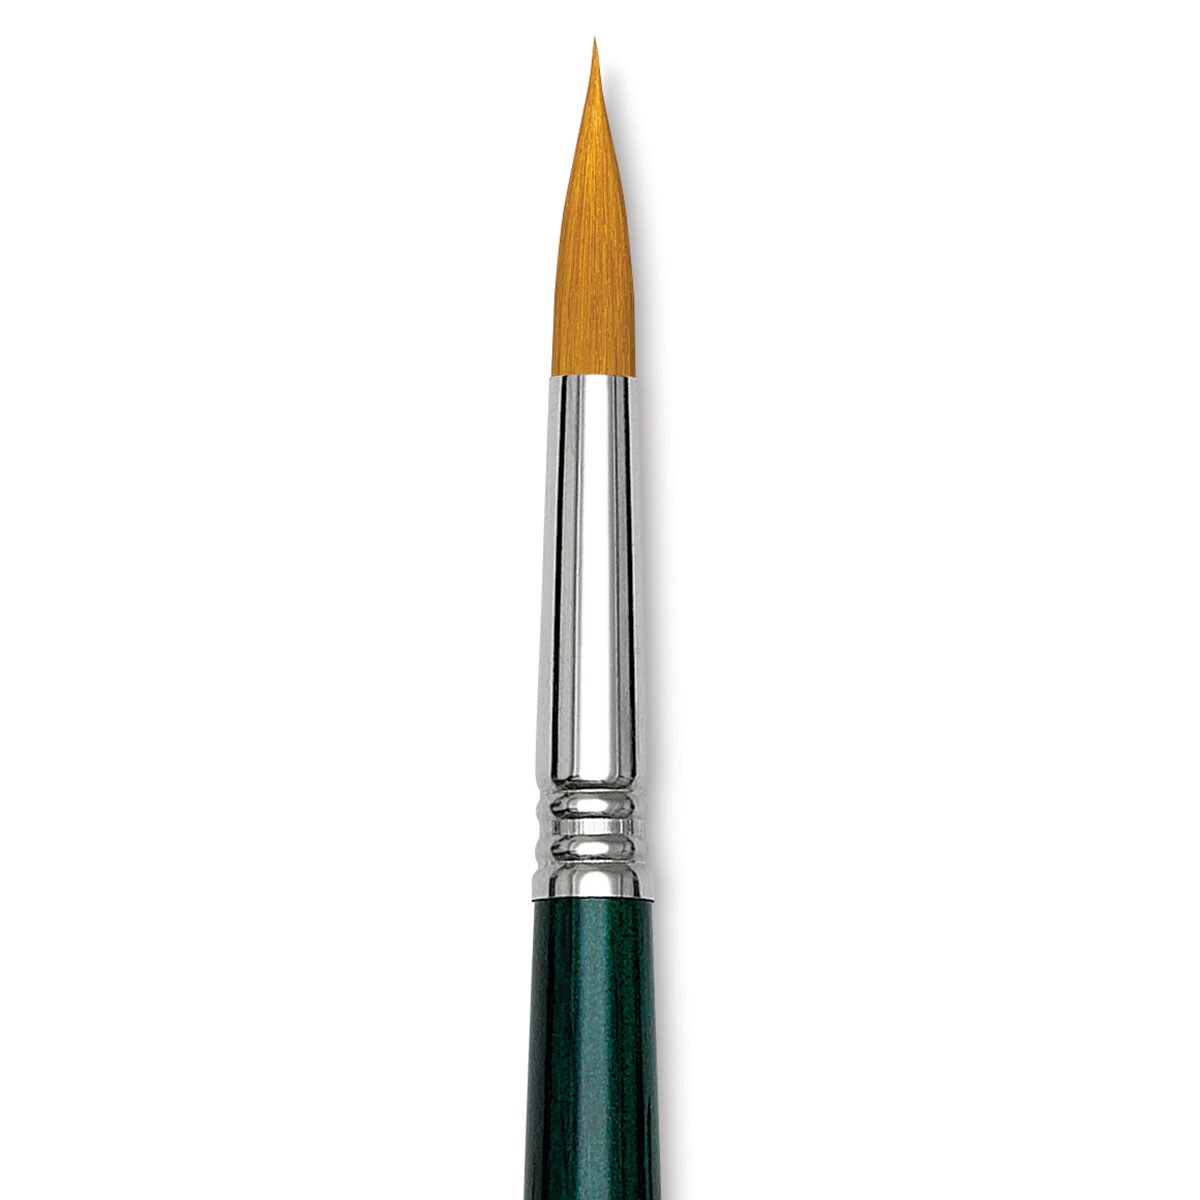 Escoda Barroco Toray Gold Synthetic Brush - Round, Long Handle, Size 0